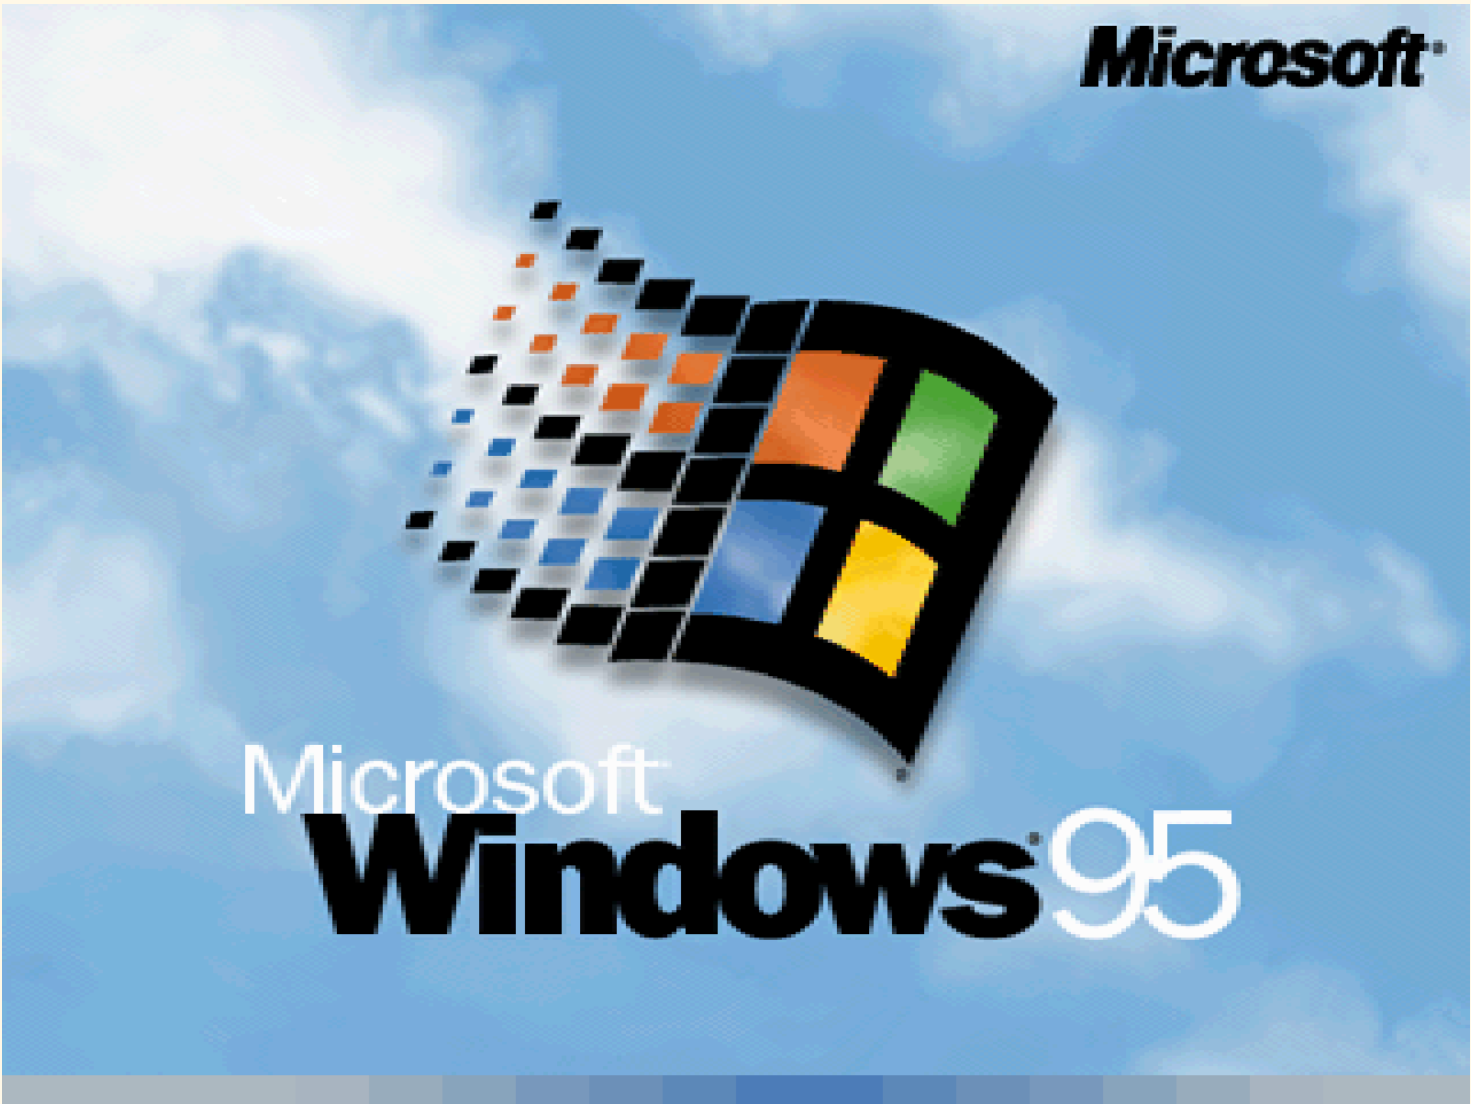 Windows 95 startup